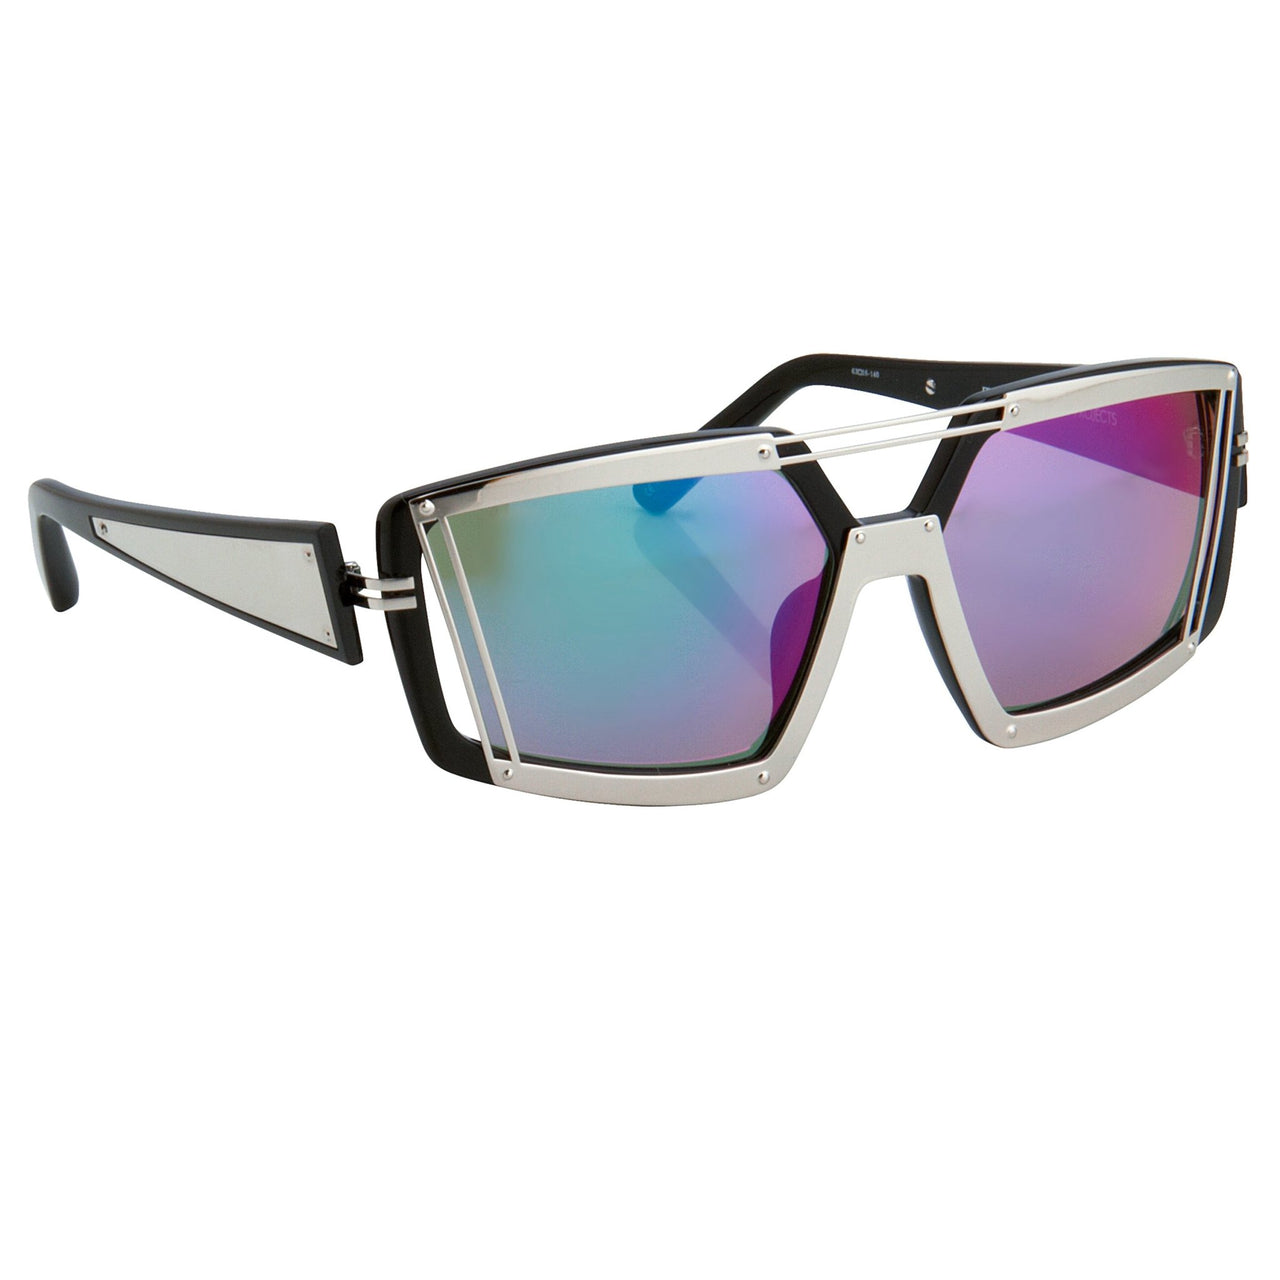 Prabal Gurung Sunglasses Rectangular Black Bar With Green/Purple Mirror Lenses PG3C4SUN - Watches & Crystals